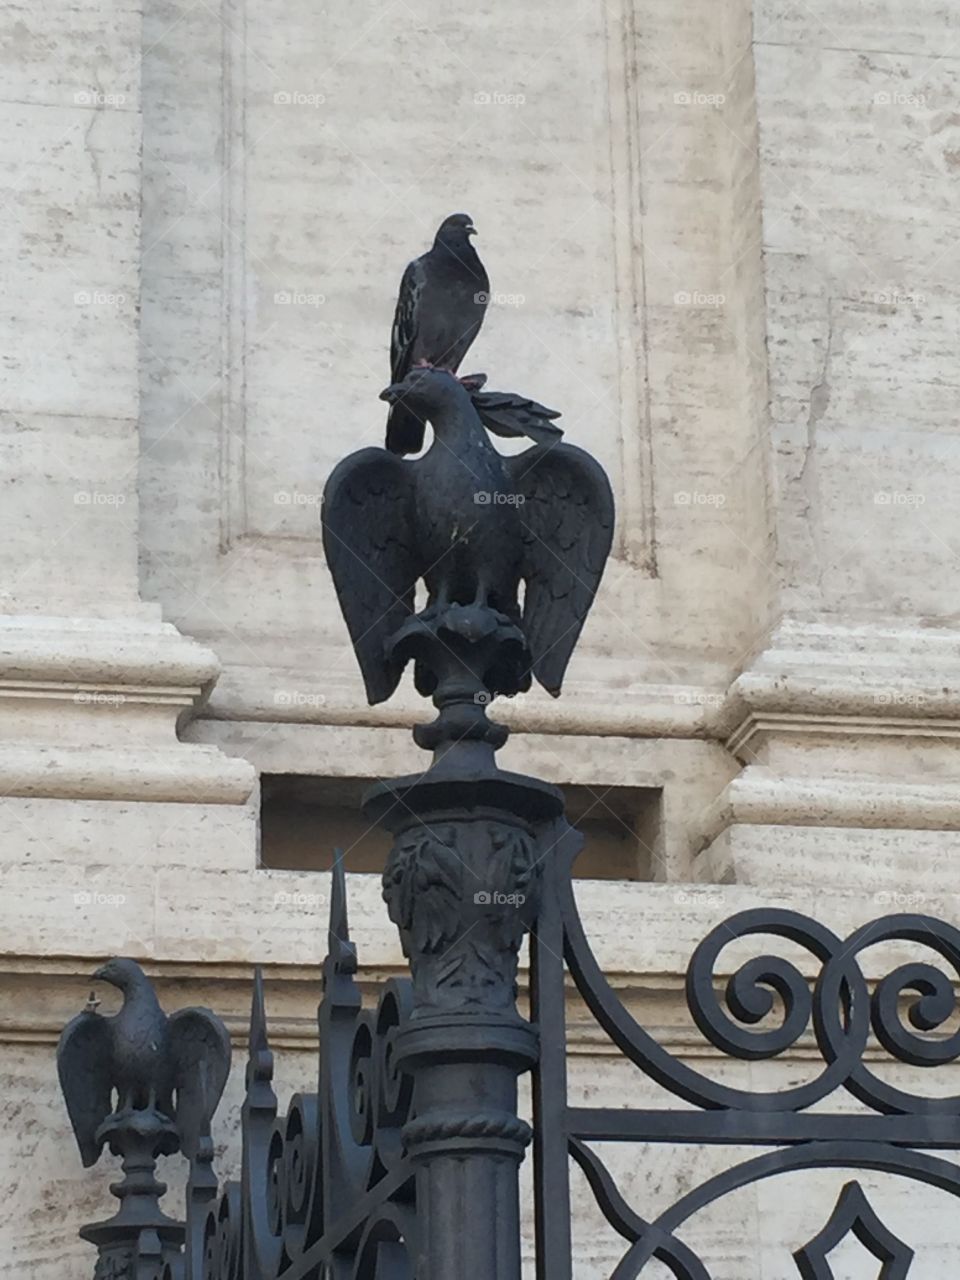 The birds of Piazza Novona